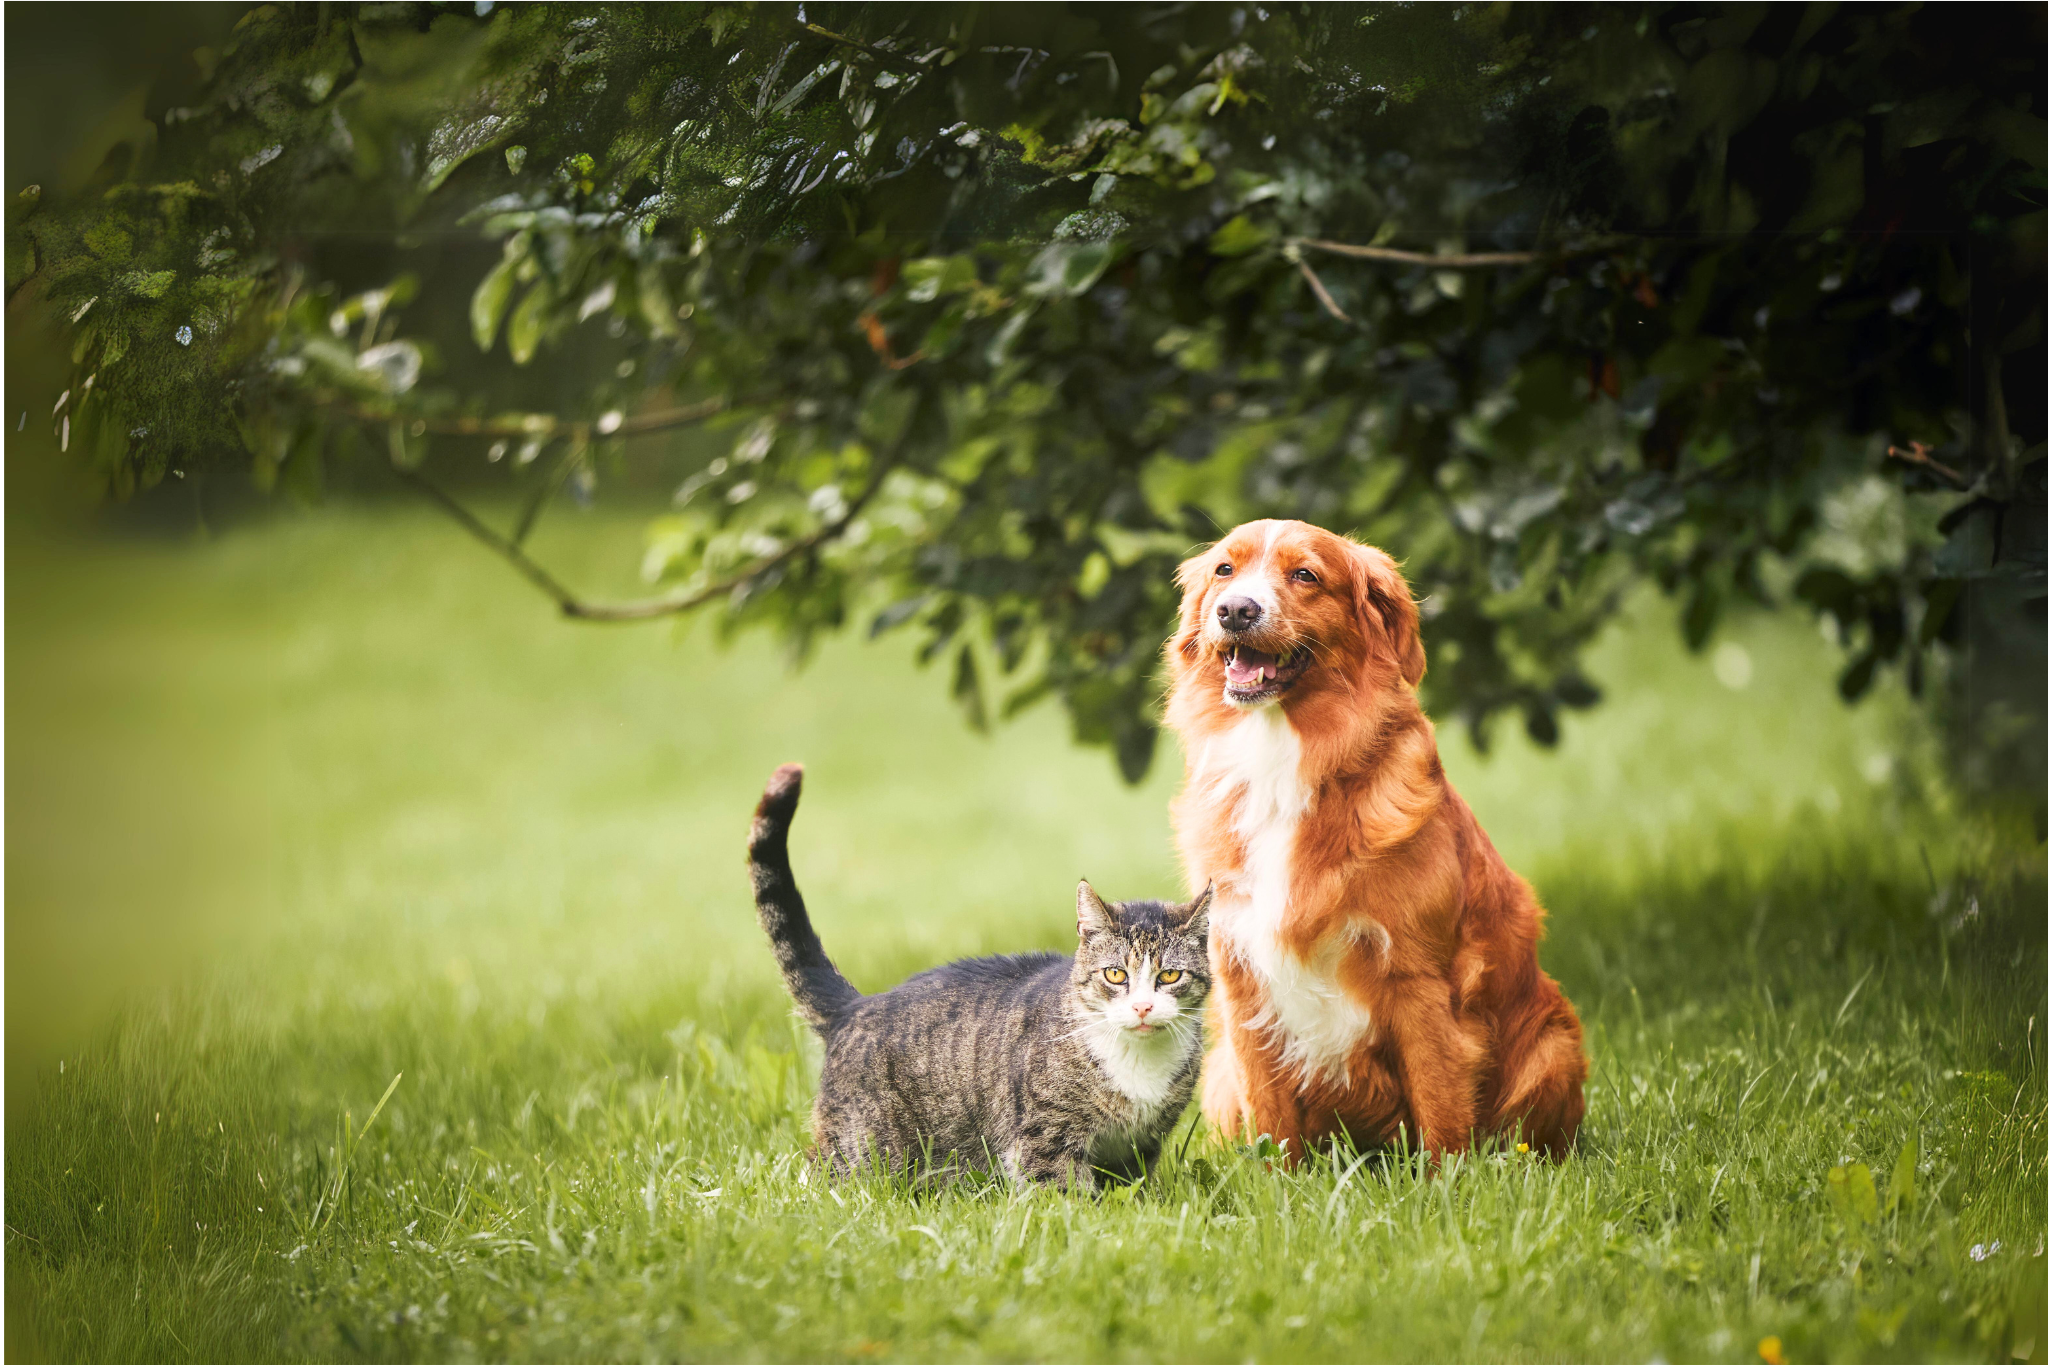 Dog & Cat in Grass